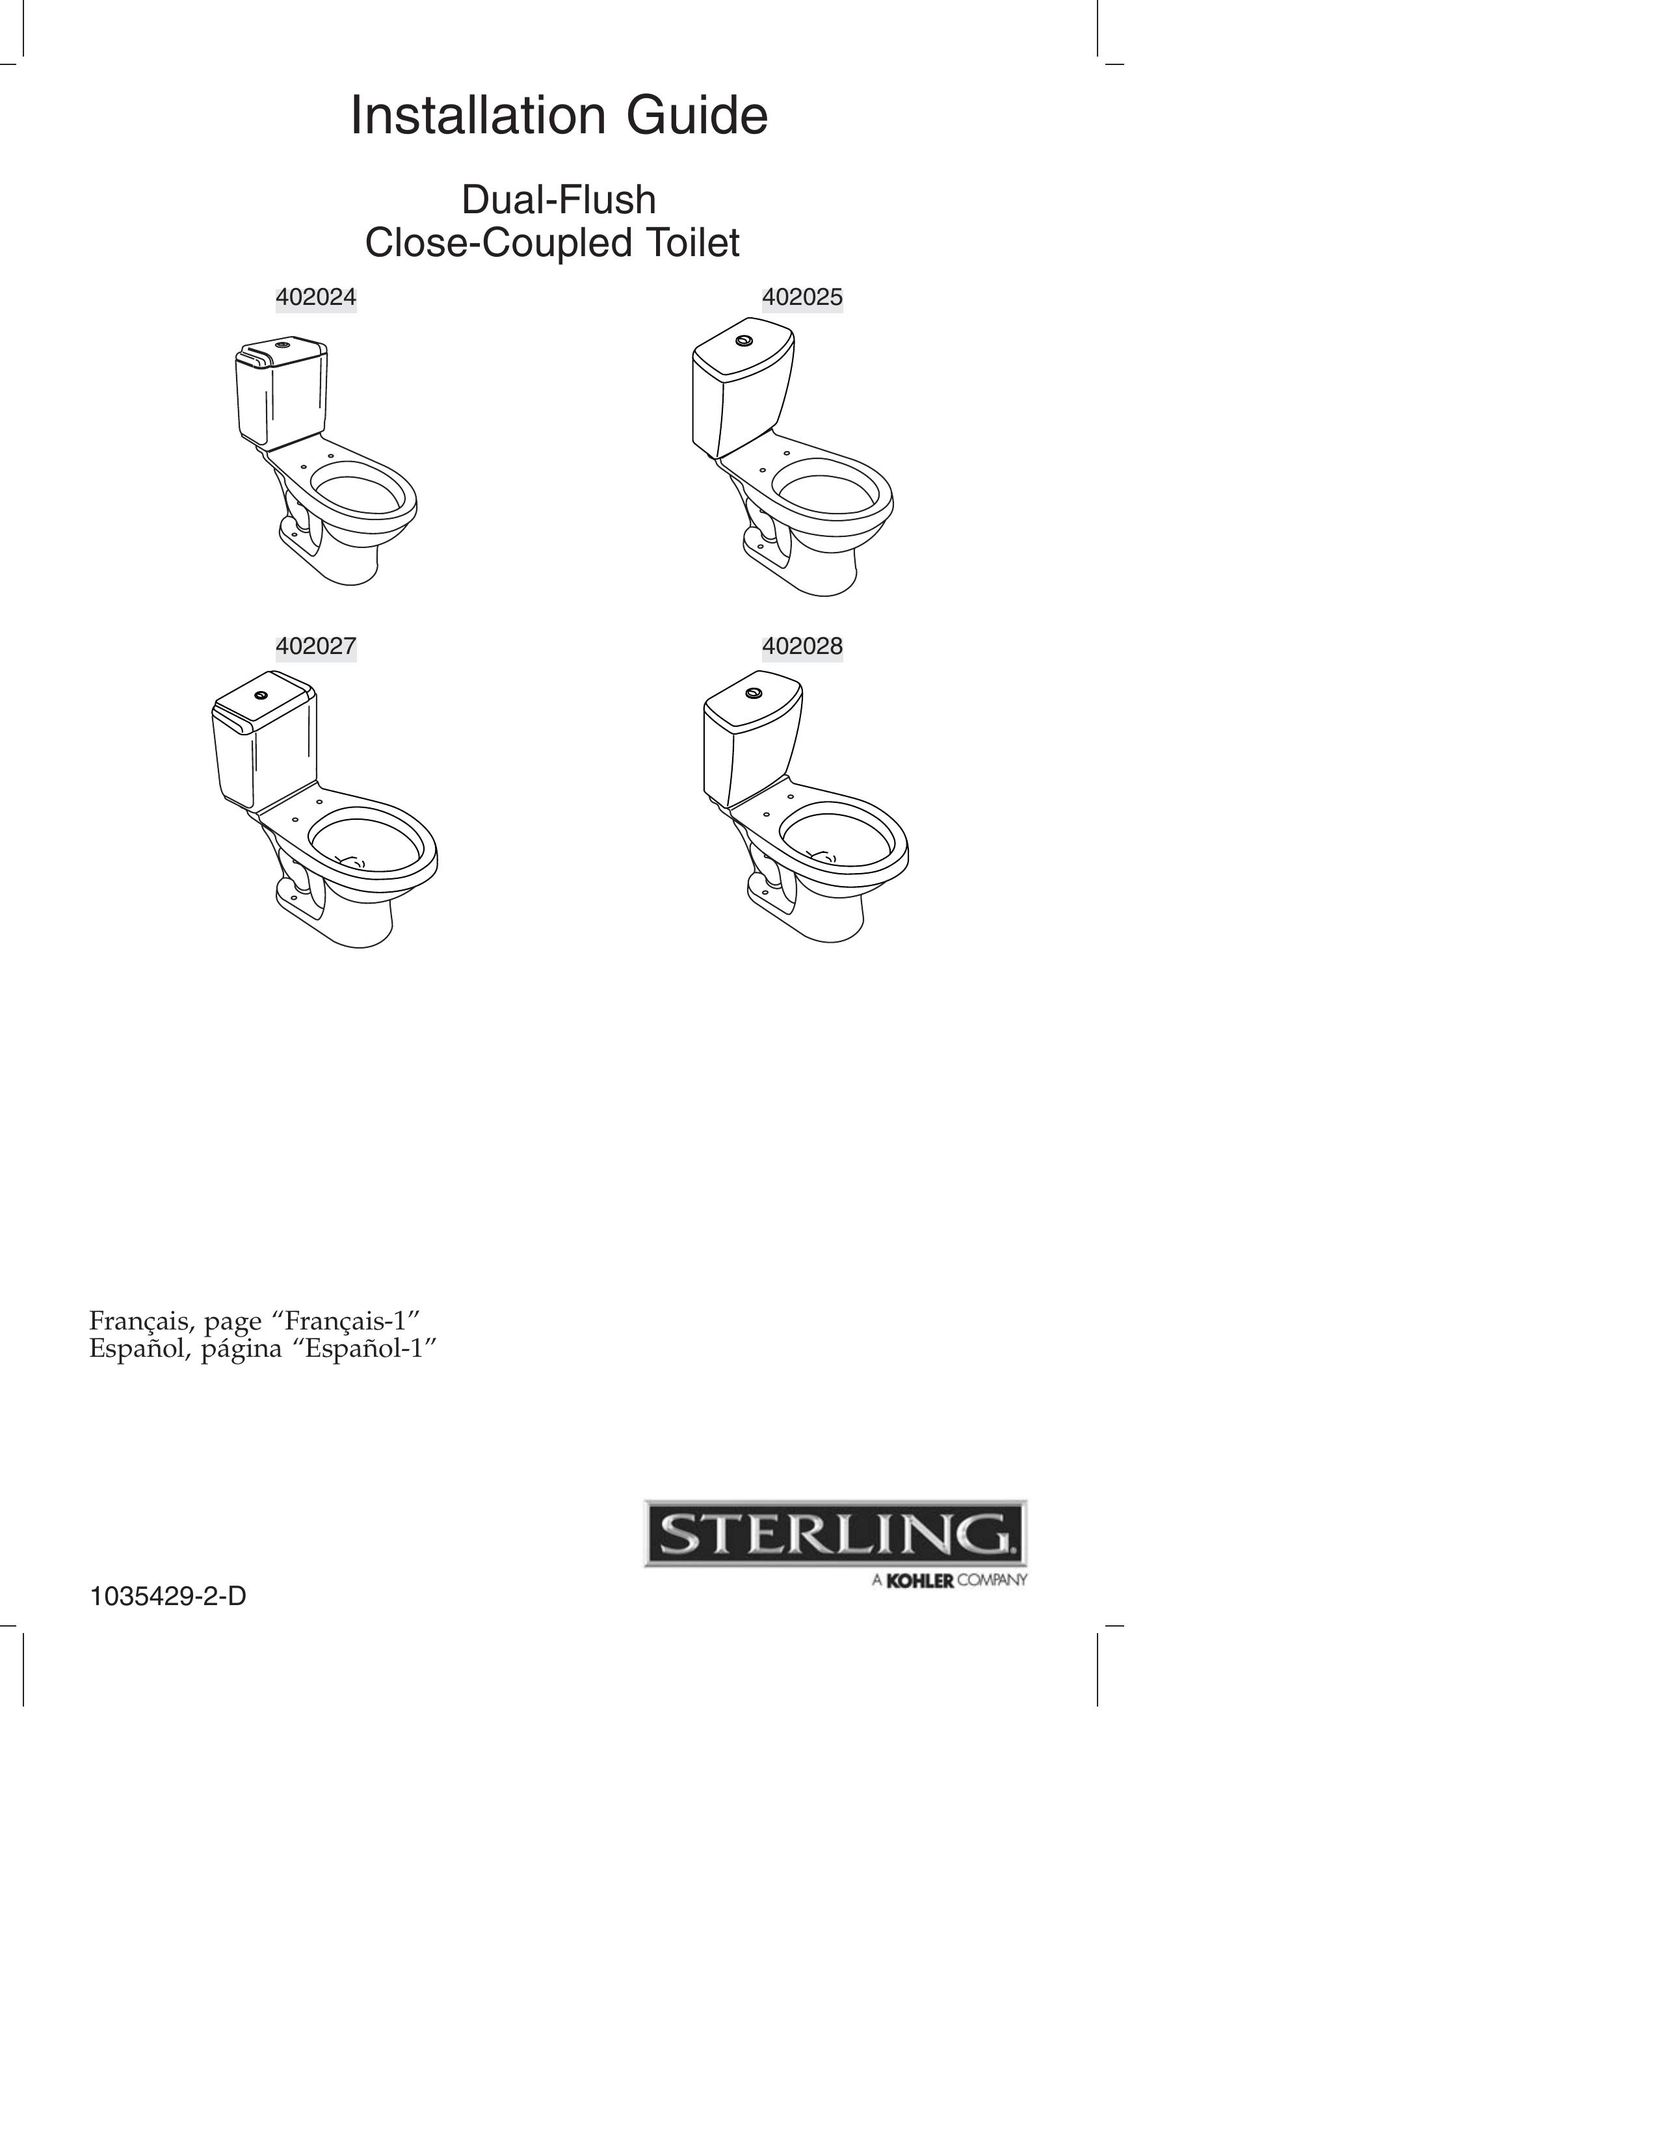 Sterling Plumbing 402027 Indoor Furnishings User Manual